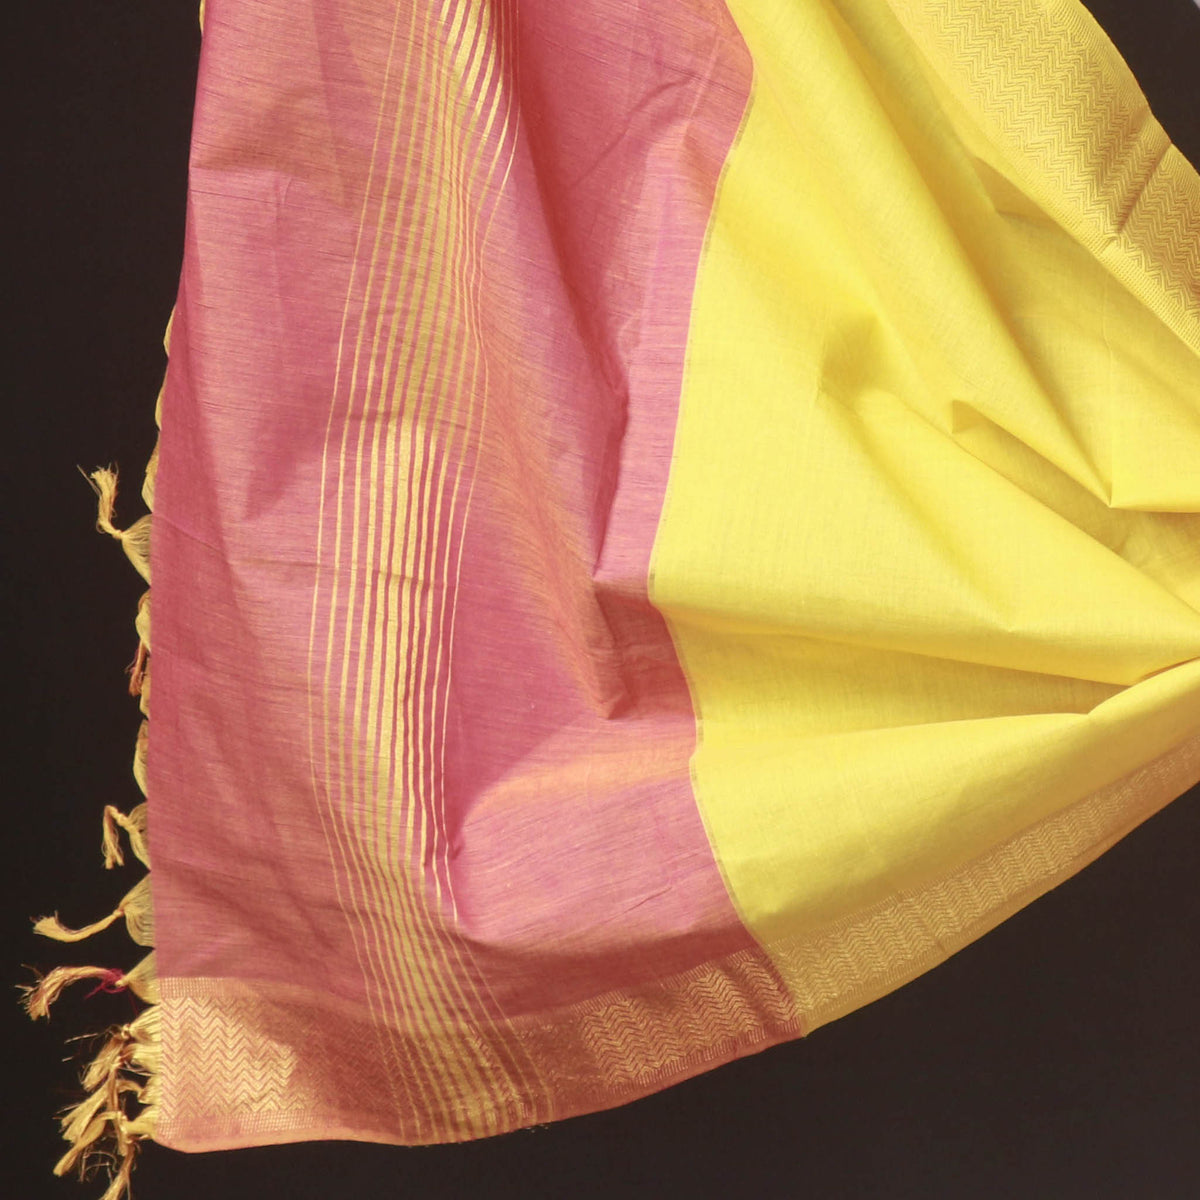 3pc Original Mangalagiri Handloom Cotton Checks Suit Material Set with Zari Border